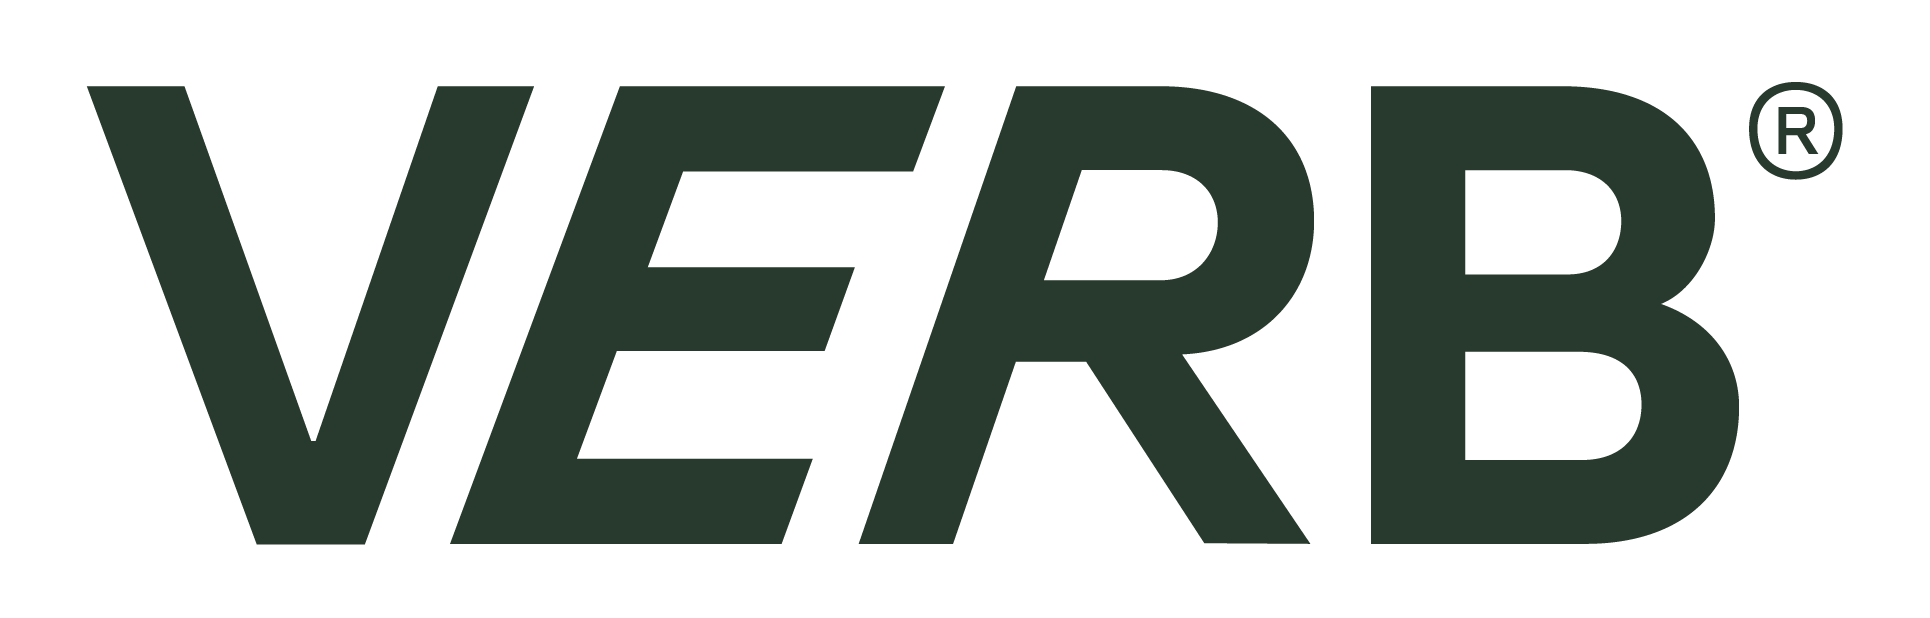 Green Verb Logo